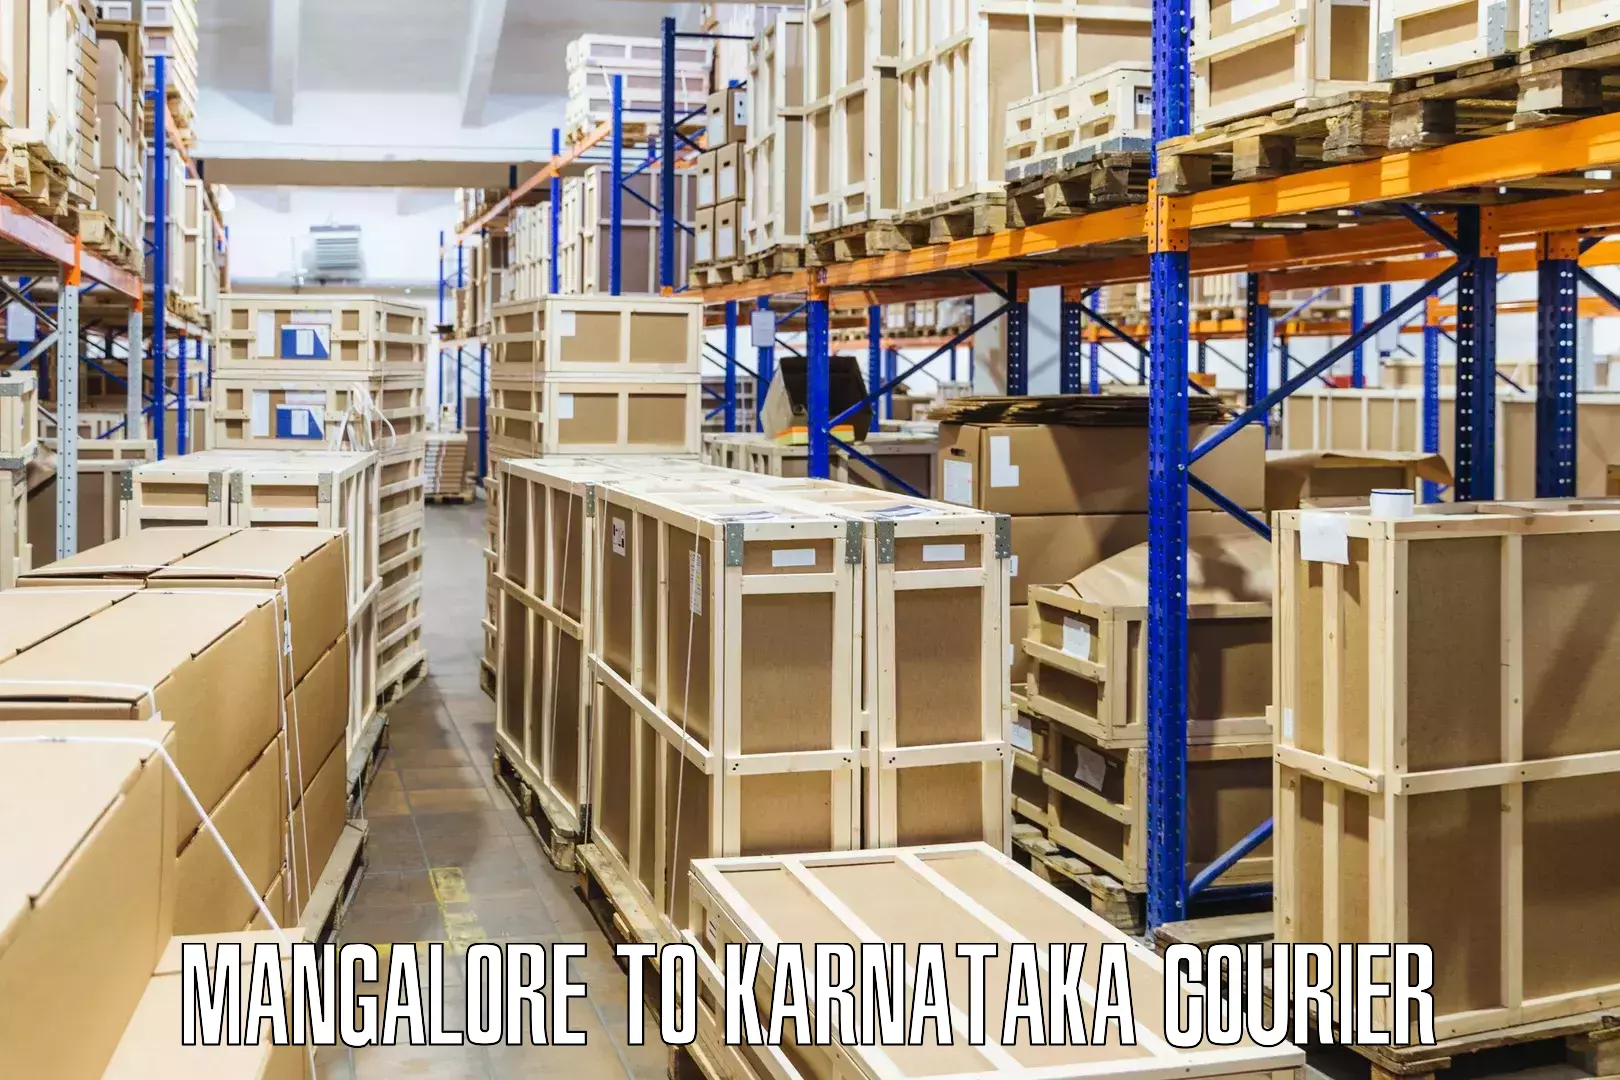 Multi-city courier Mangalore to Karnataka